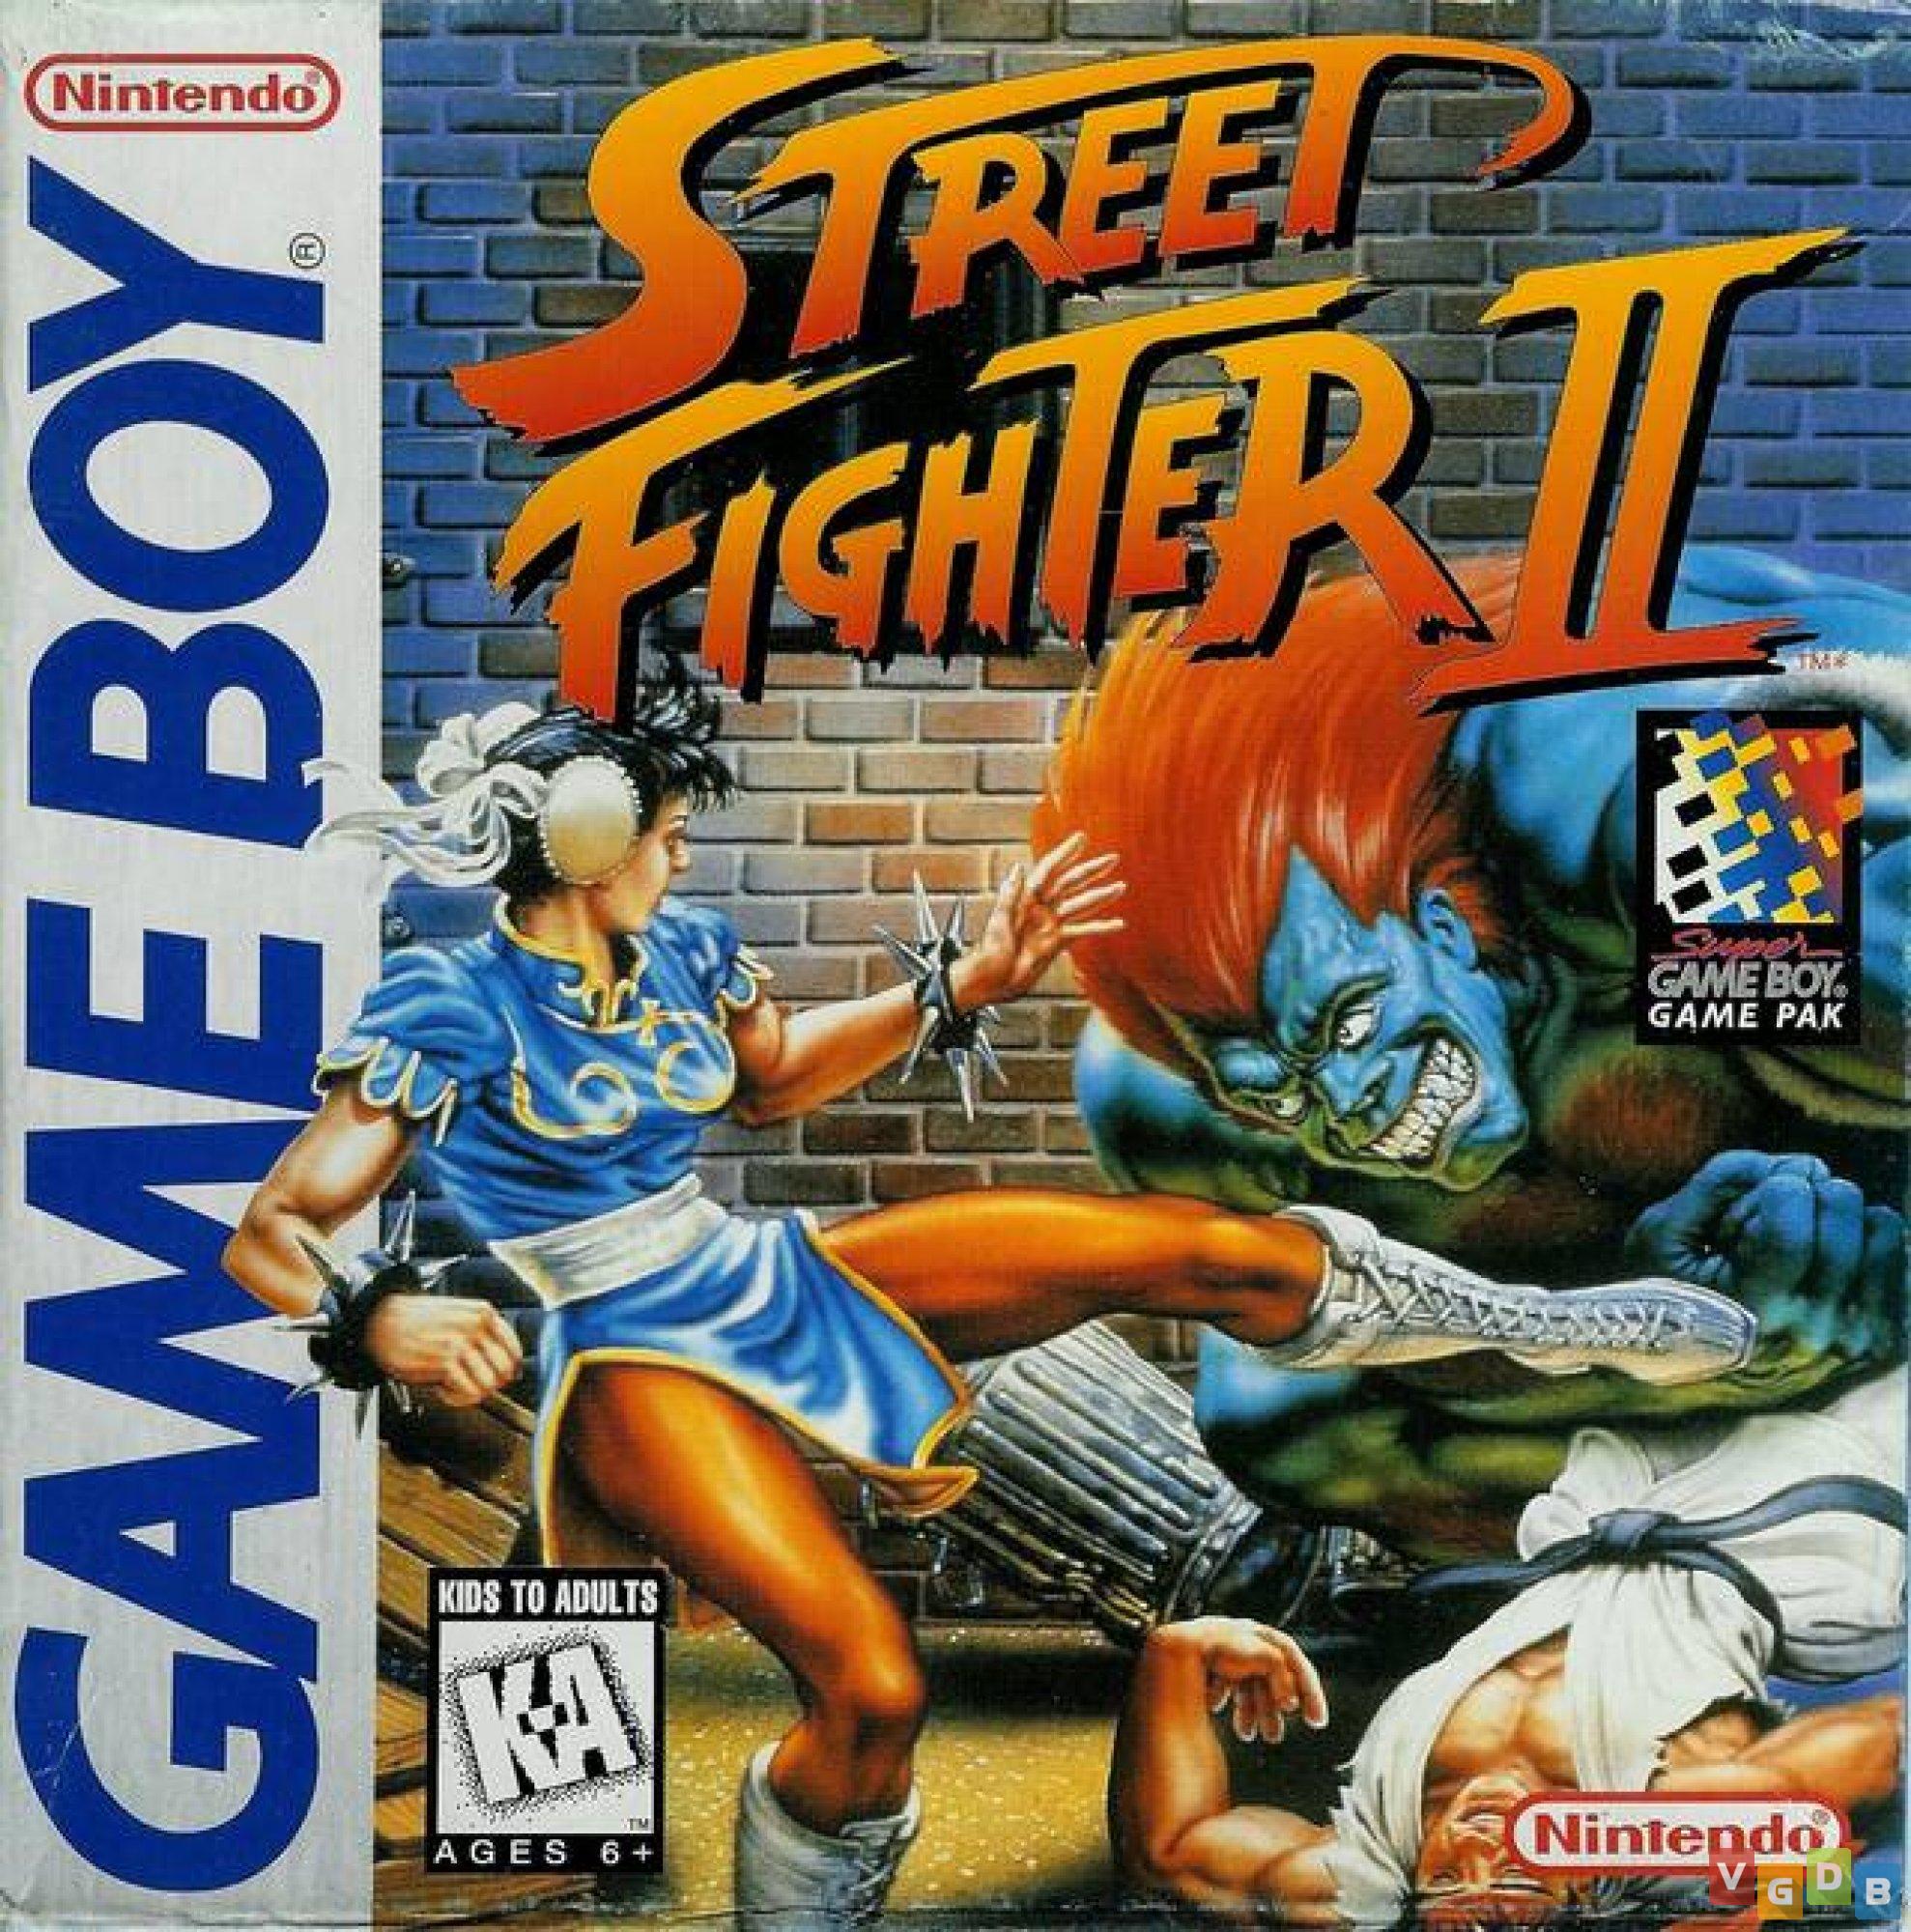 Game gb 2. Стрит Файтер game boy. Street Fighter 2 game boy. Нинтендо геймбой игры. Street Fighter II 1991.